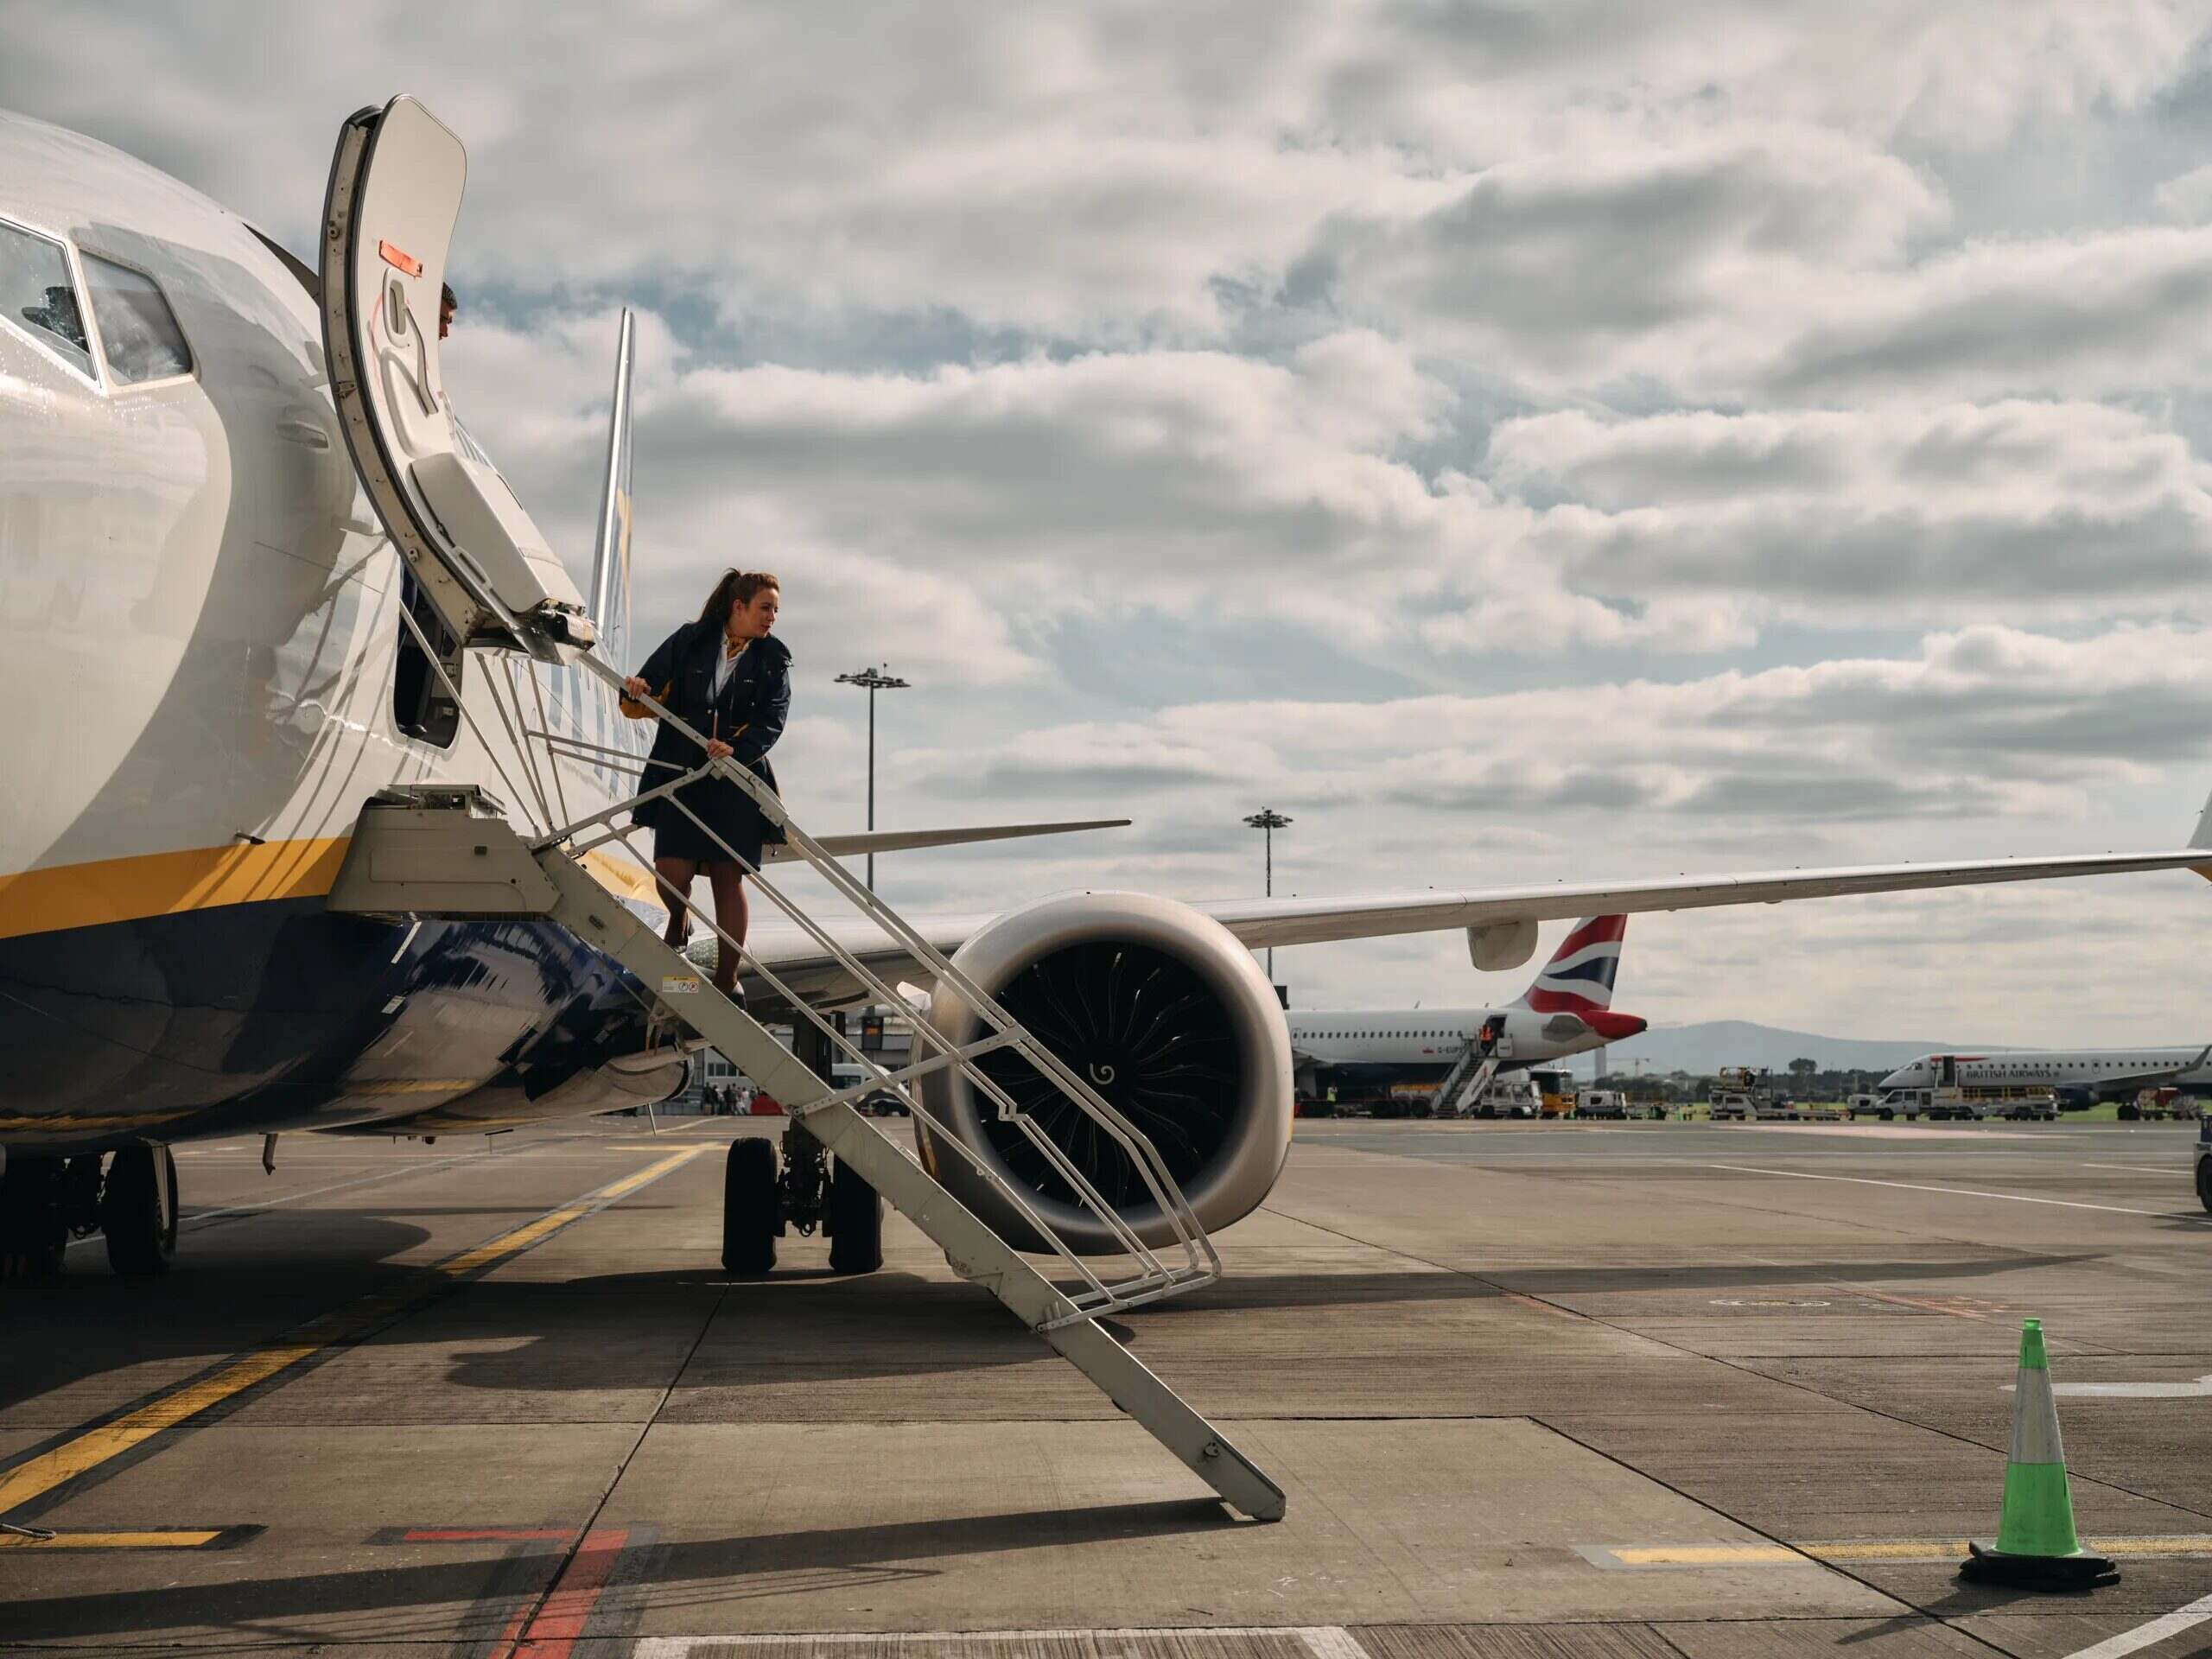 Ryanair Adds Over 500 Flights (100,000 Seats) For Autumn Half-Term